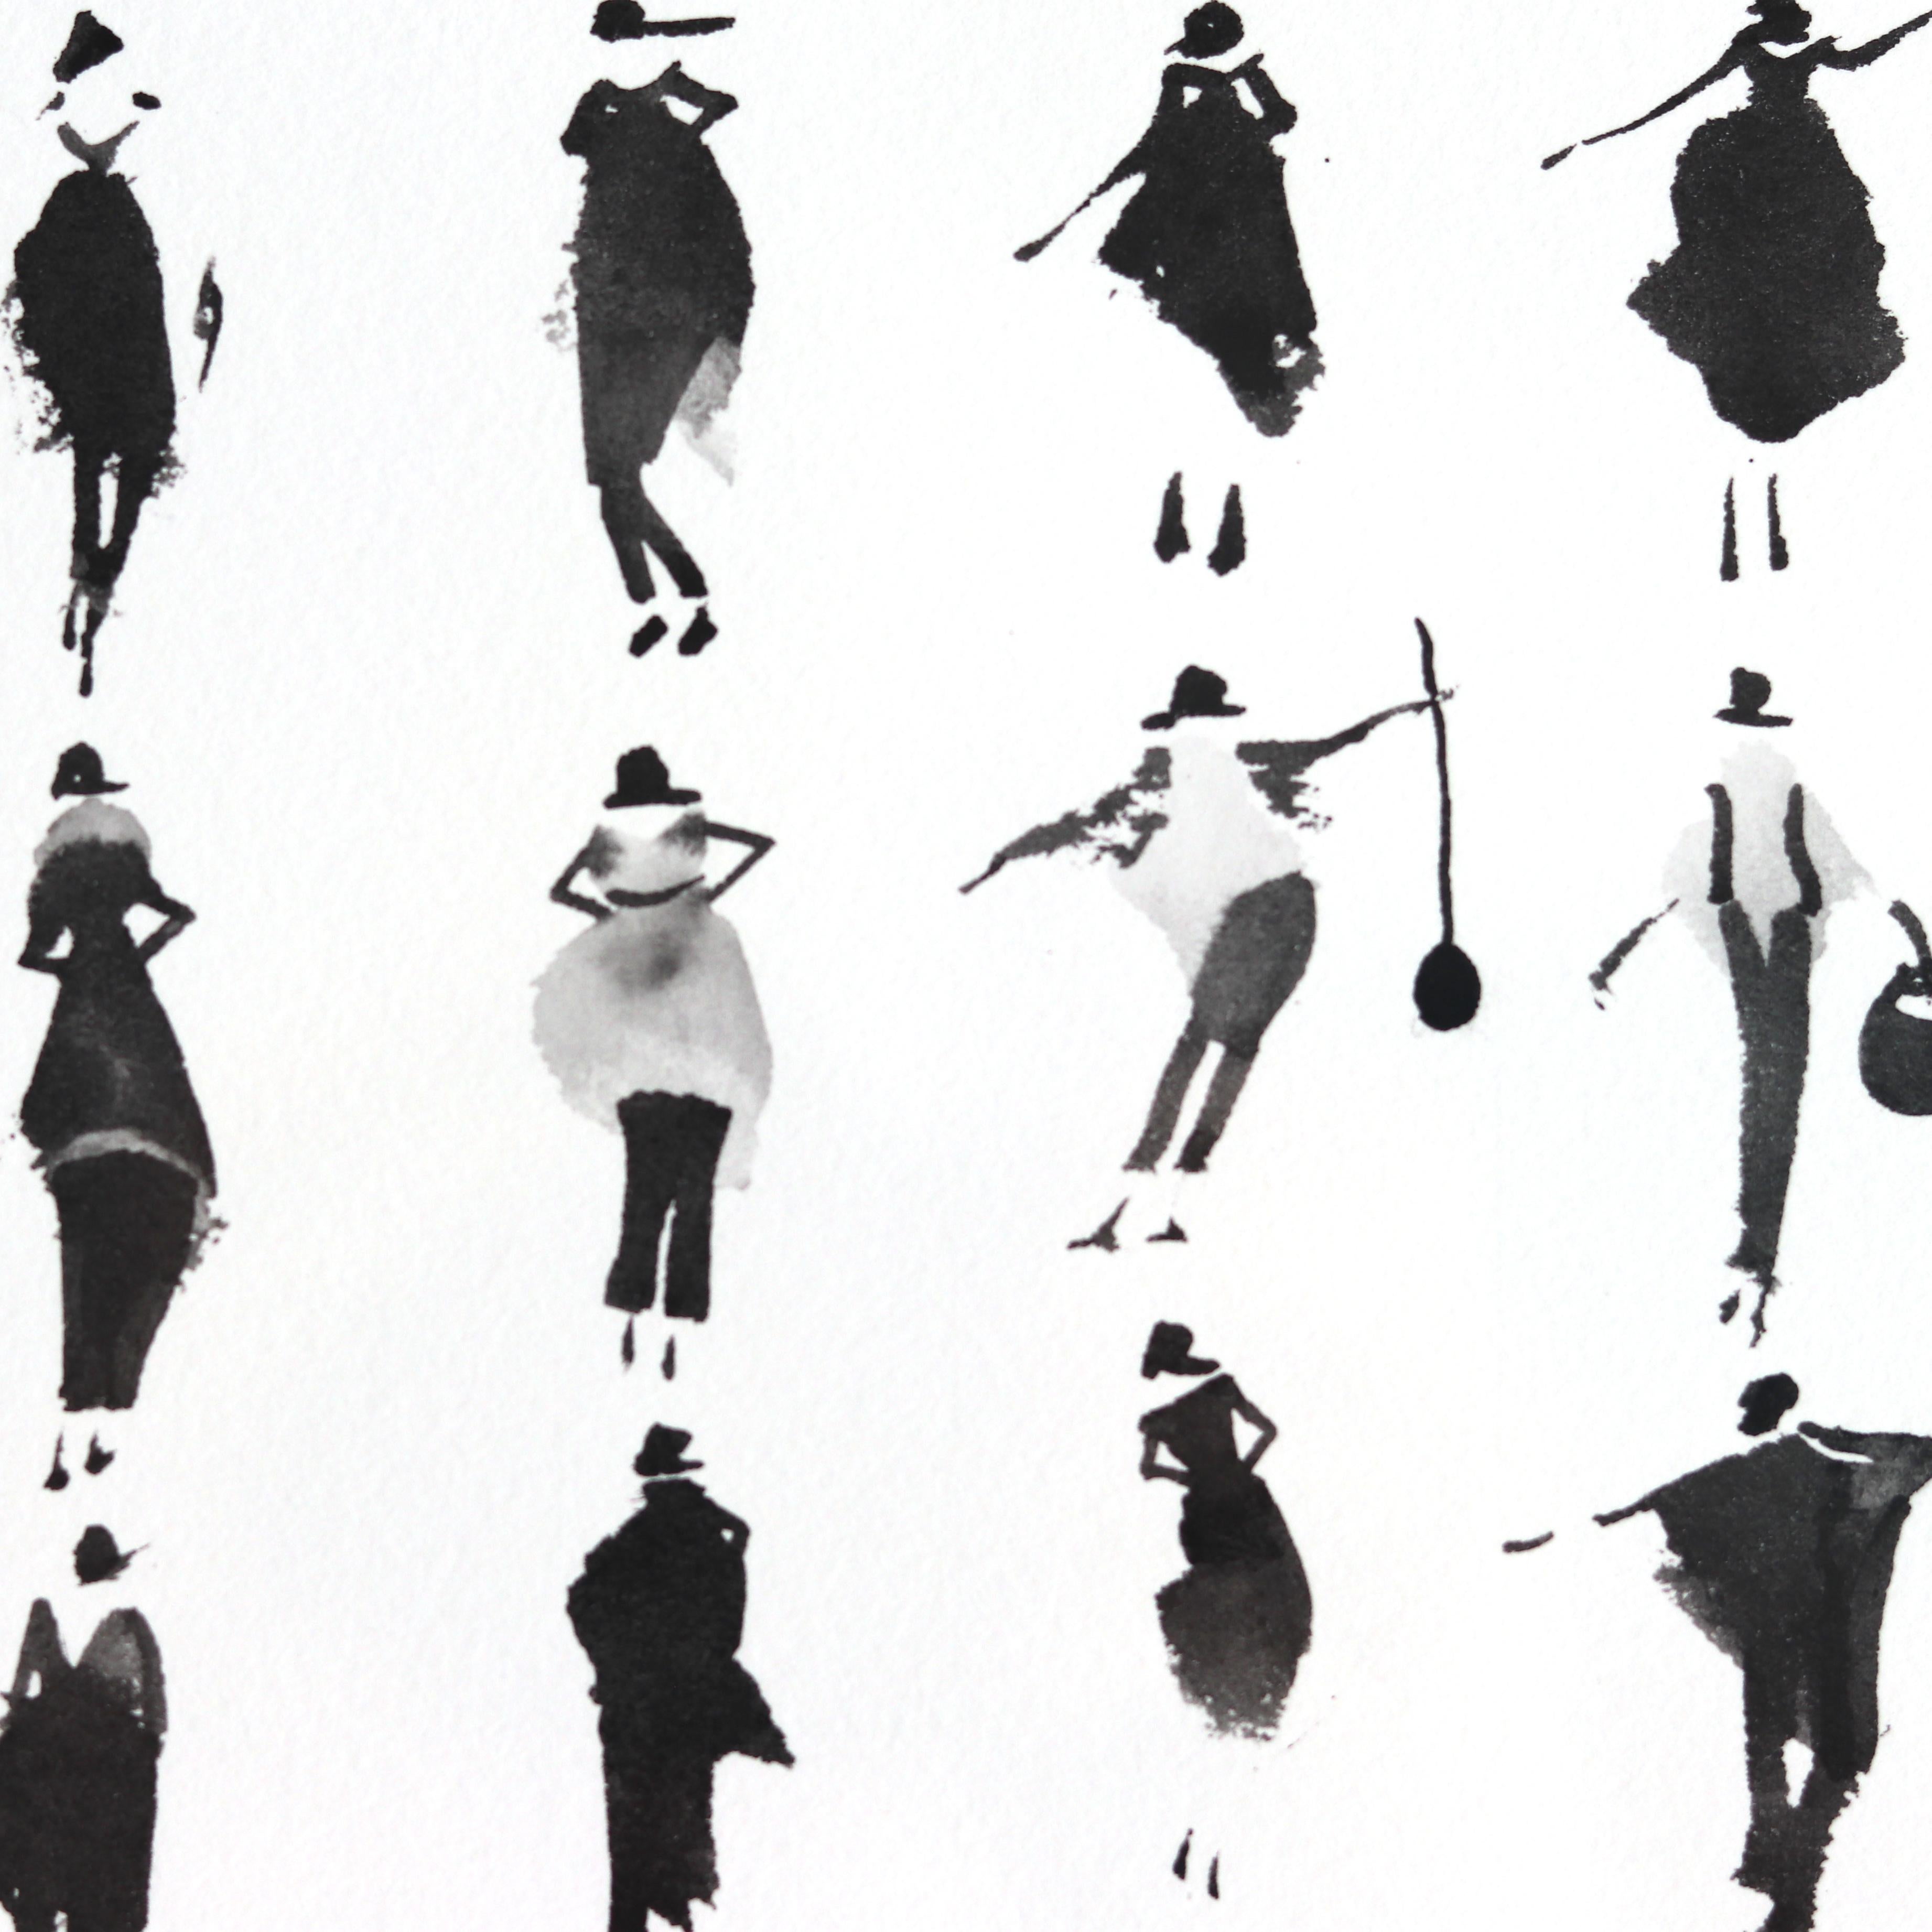 Buena Vida  - Original Ink on Paper Artwork with Playful Figures Black and White 7